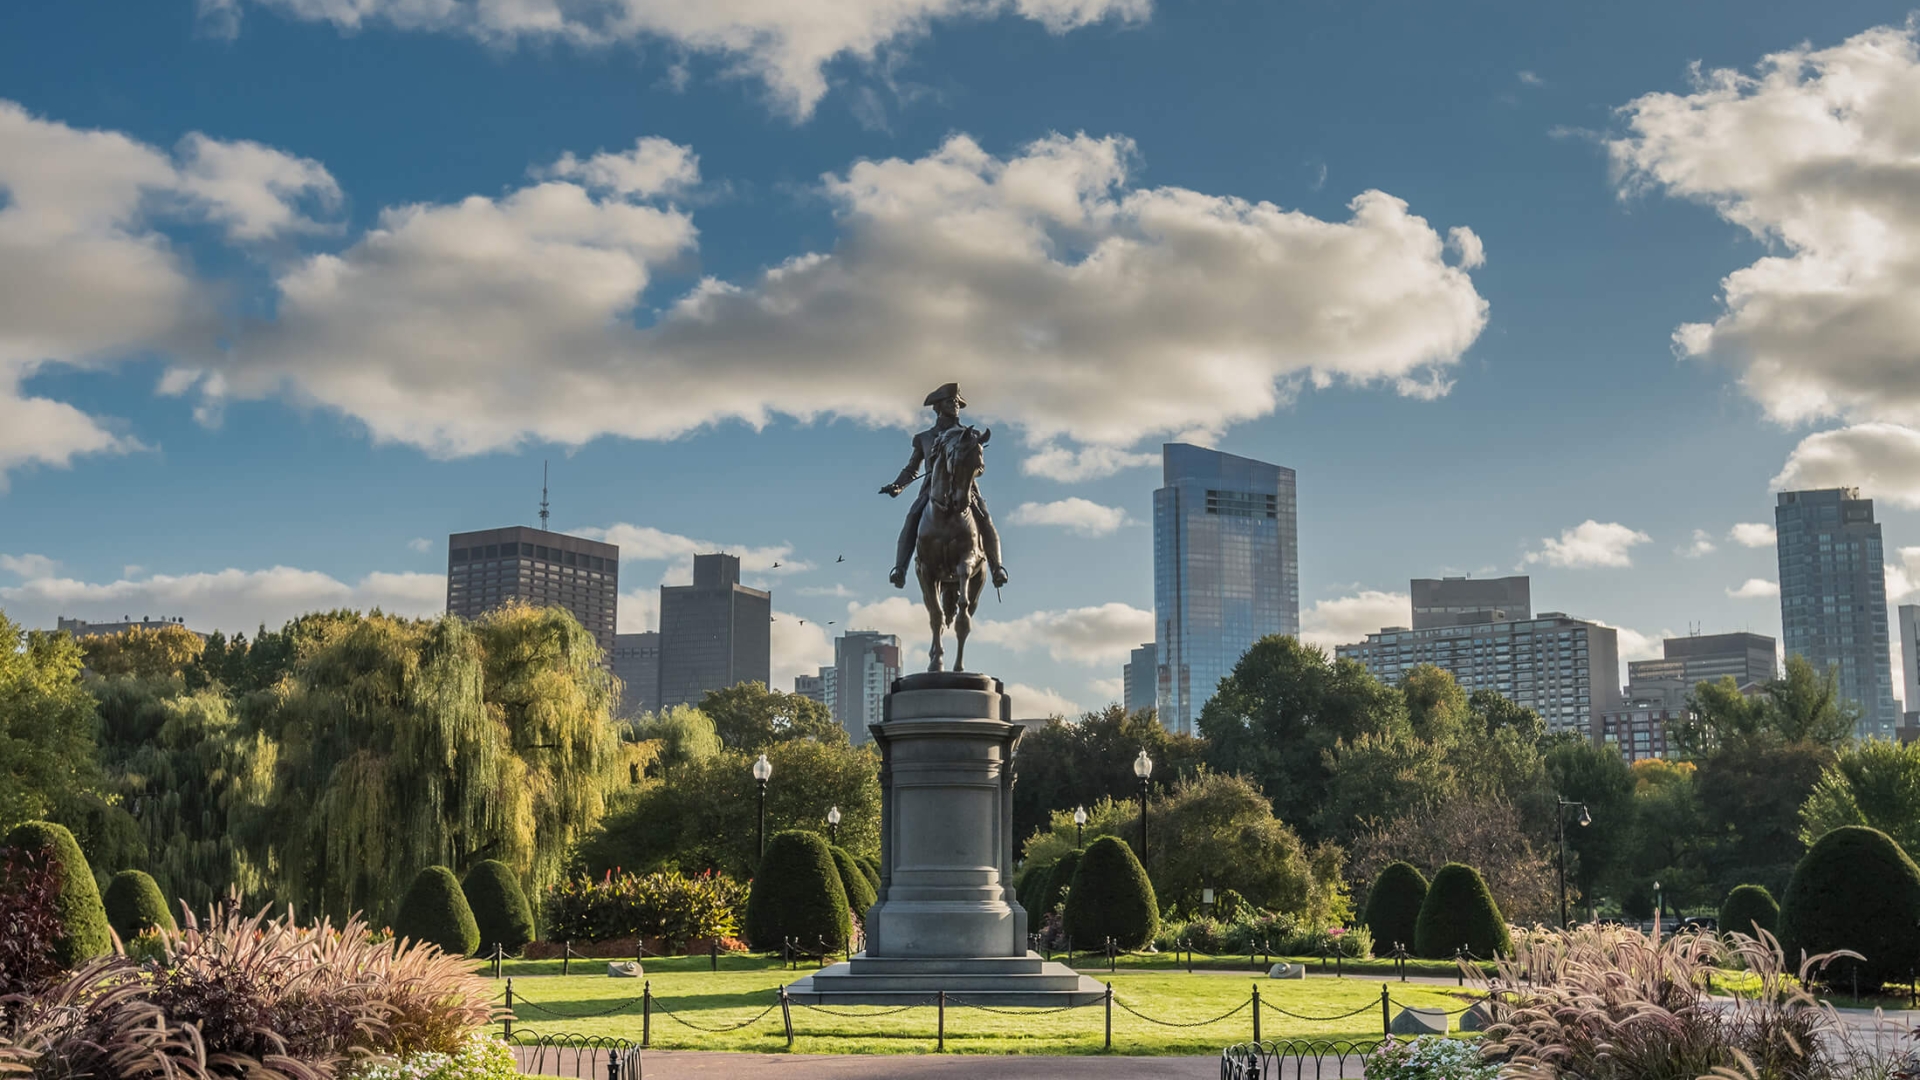 Boston Common Historical Garden